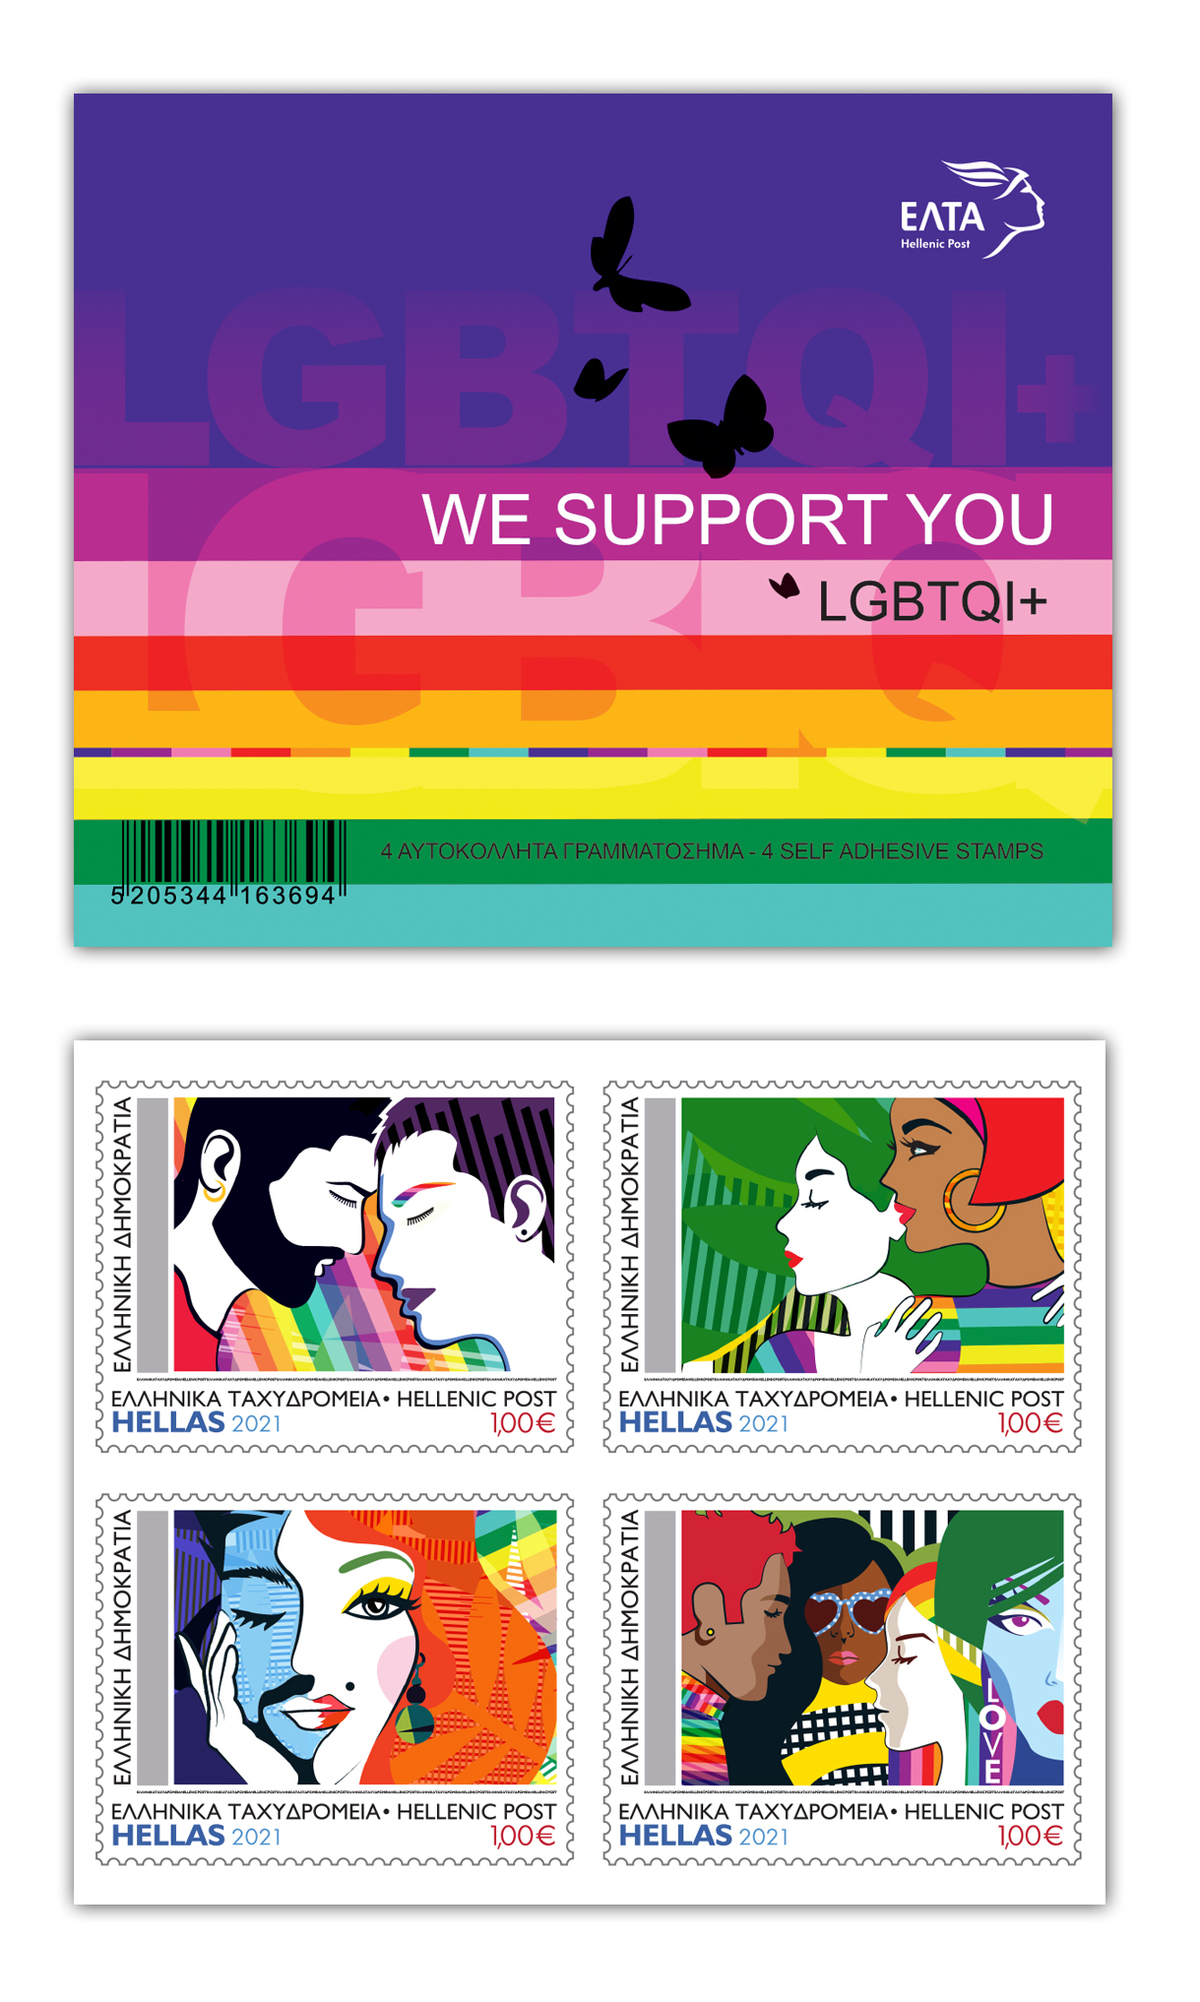 LGBTQIWe support you